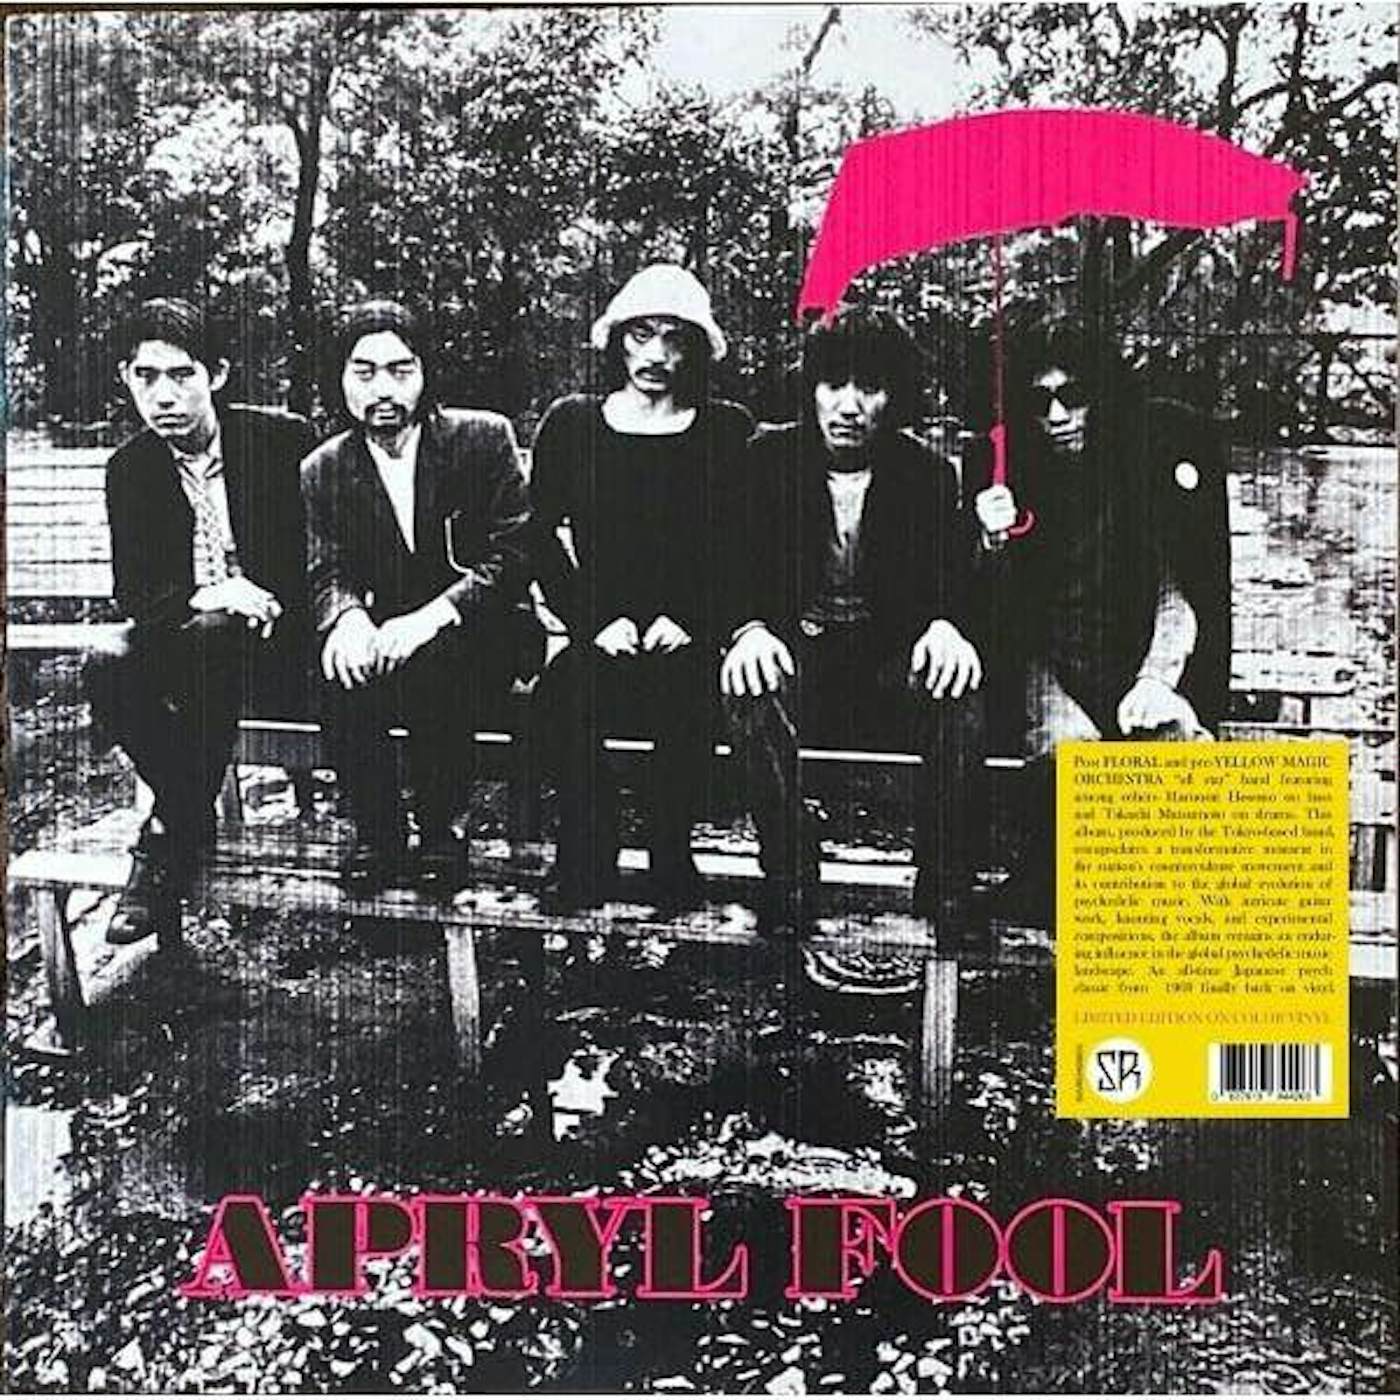  The Apryl Fool (Pink) Vinyl Record